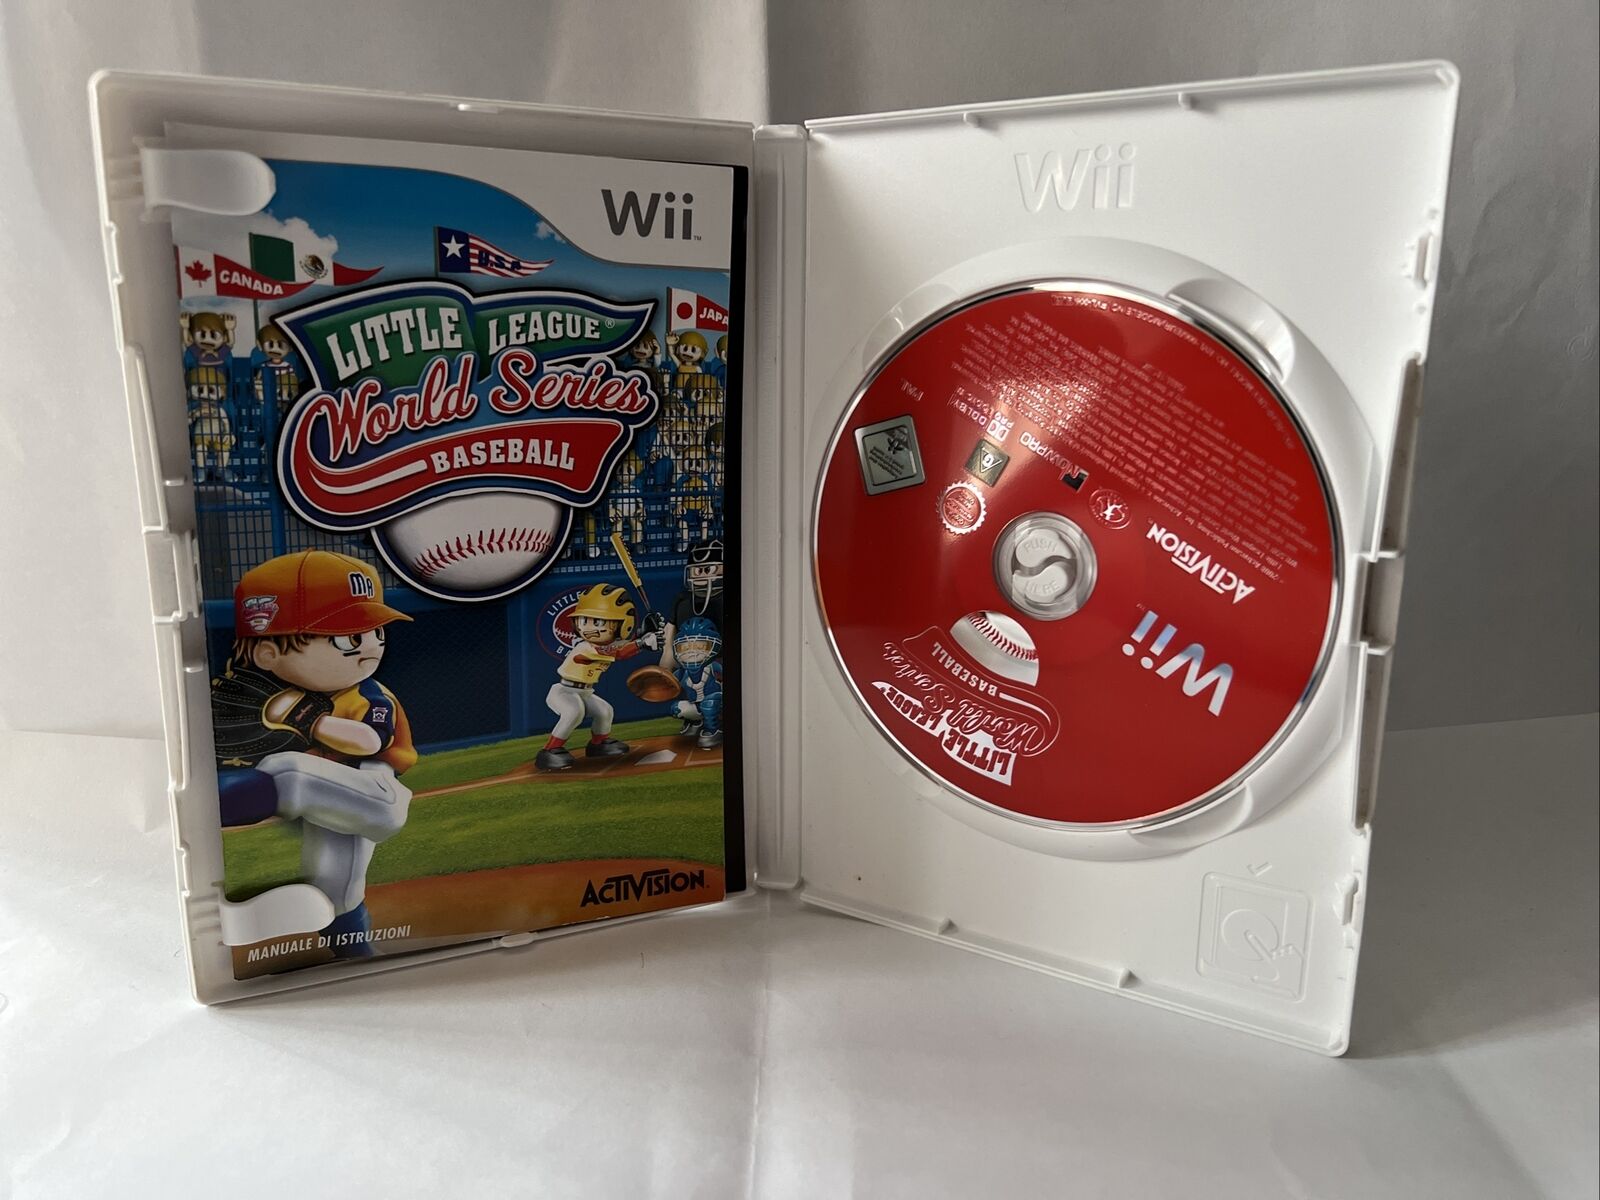 Wii-videogioco-Little-League-World-Series-Baseball-Pal-Ita-133962004284-4